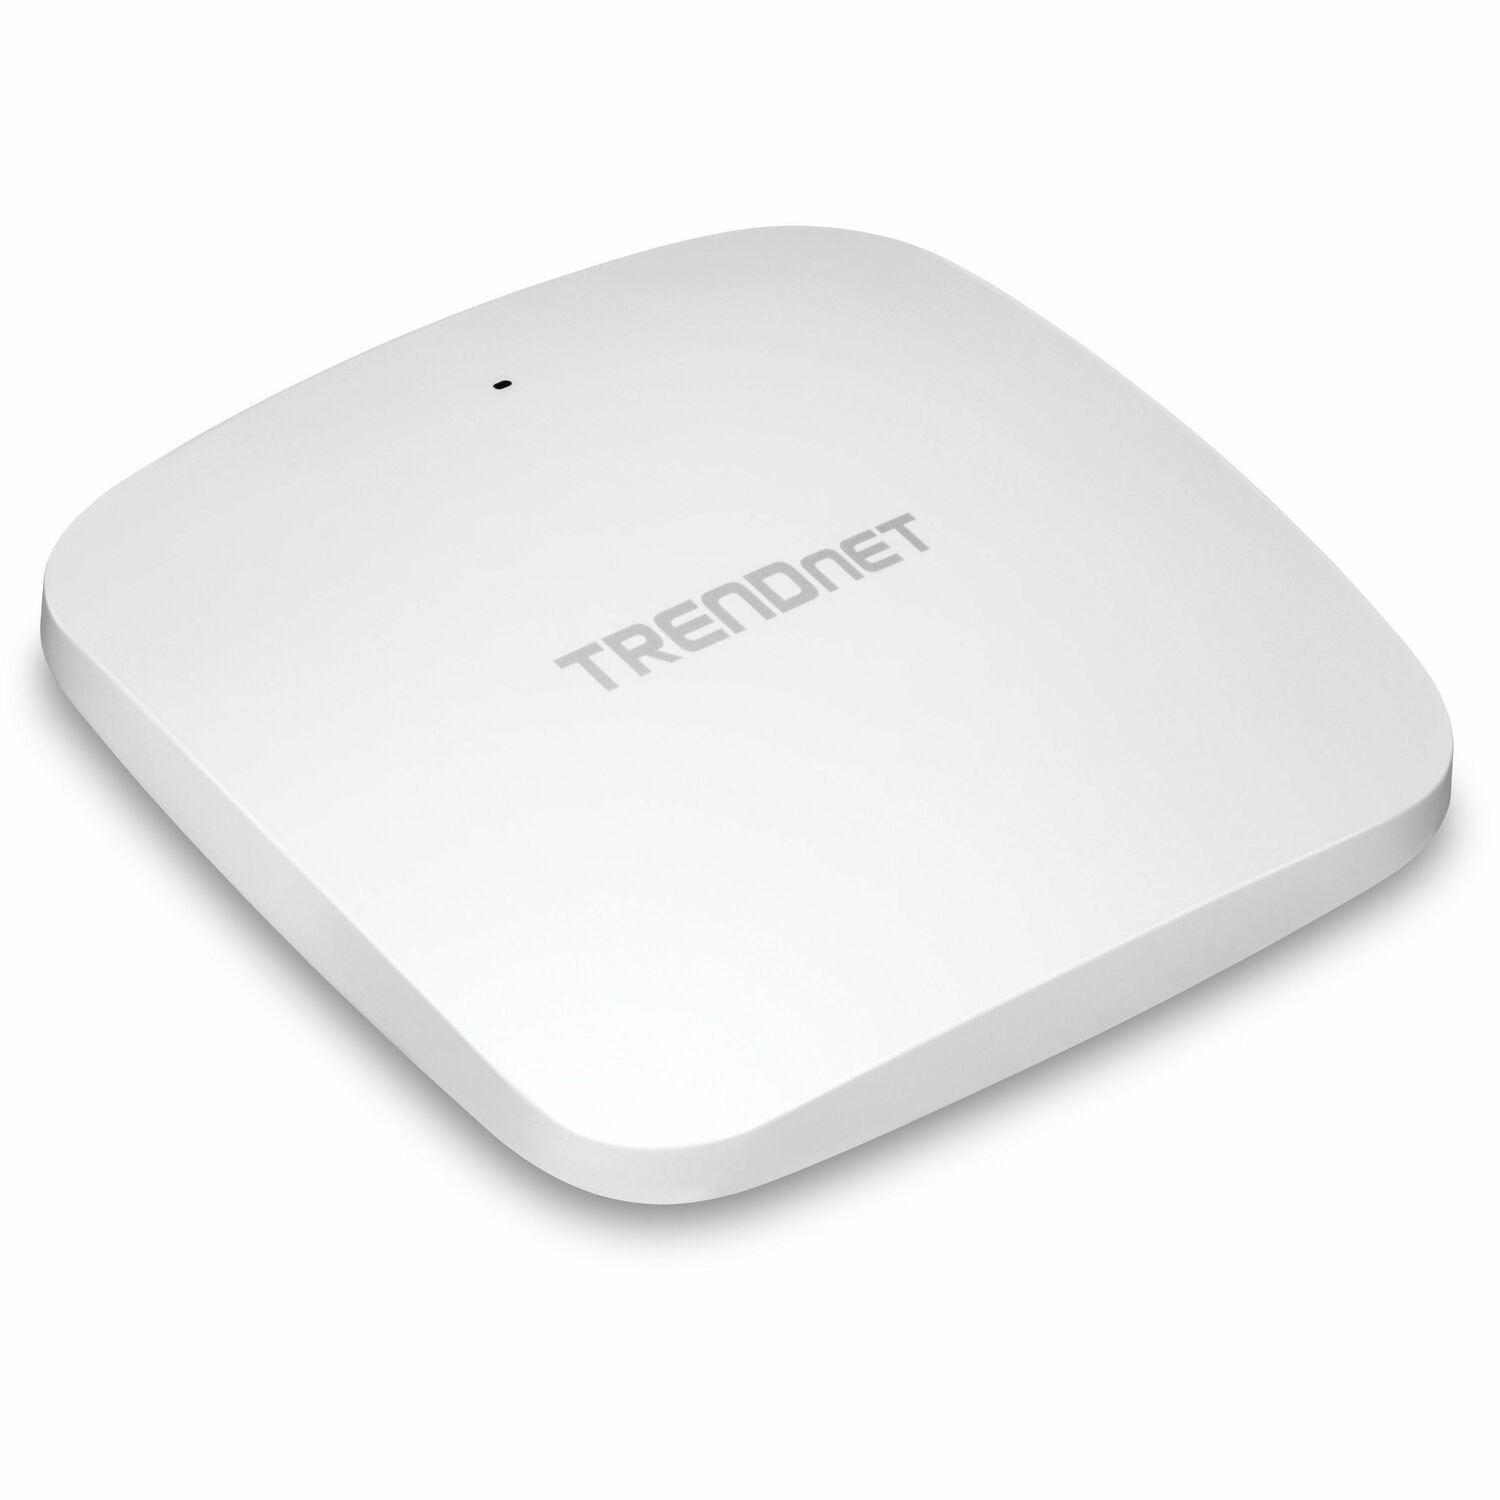 TRENDnet TEW-925DAP Dual Band IEEE 802.11 a/b/g/n/ac/ax 5.27 Gbit/s Wireless Access Point - TAA Compliant